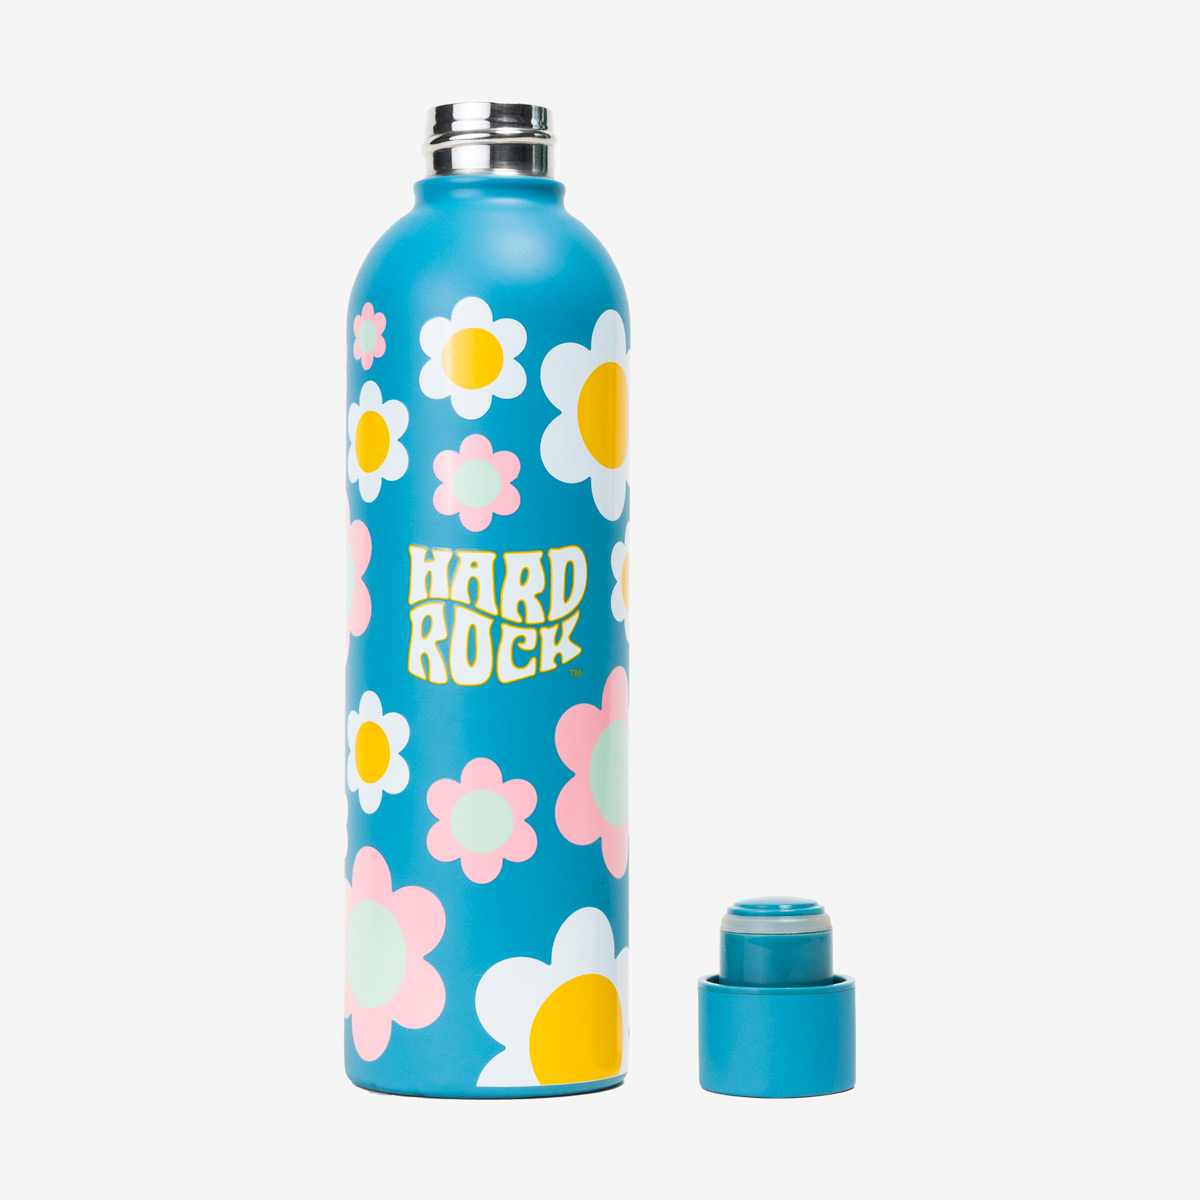 Hard Rock Music Festival Flower Power Water Bottle in Blue image number 4